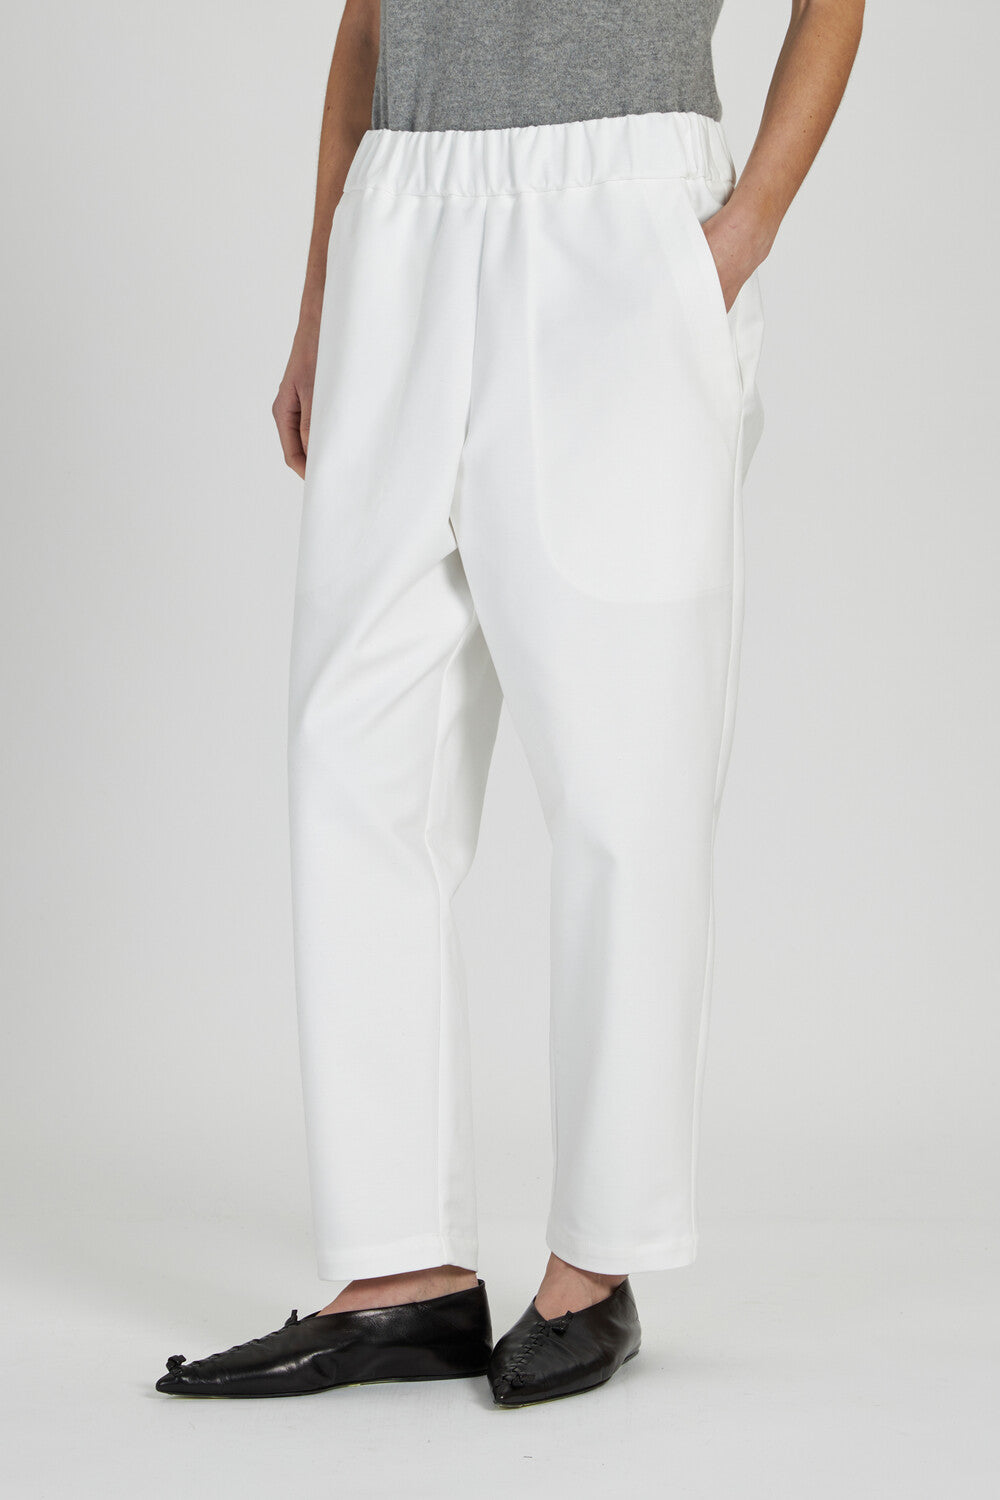 Trousers Joie Minimal / White